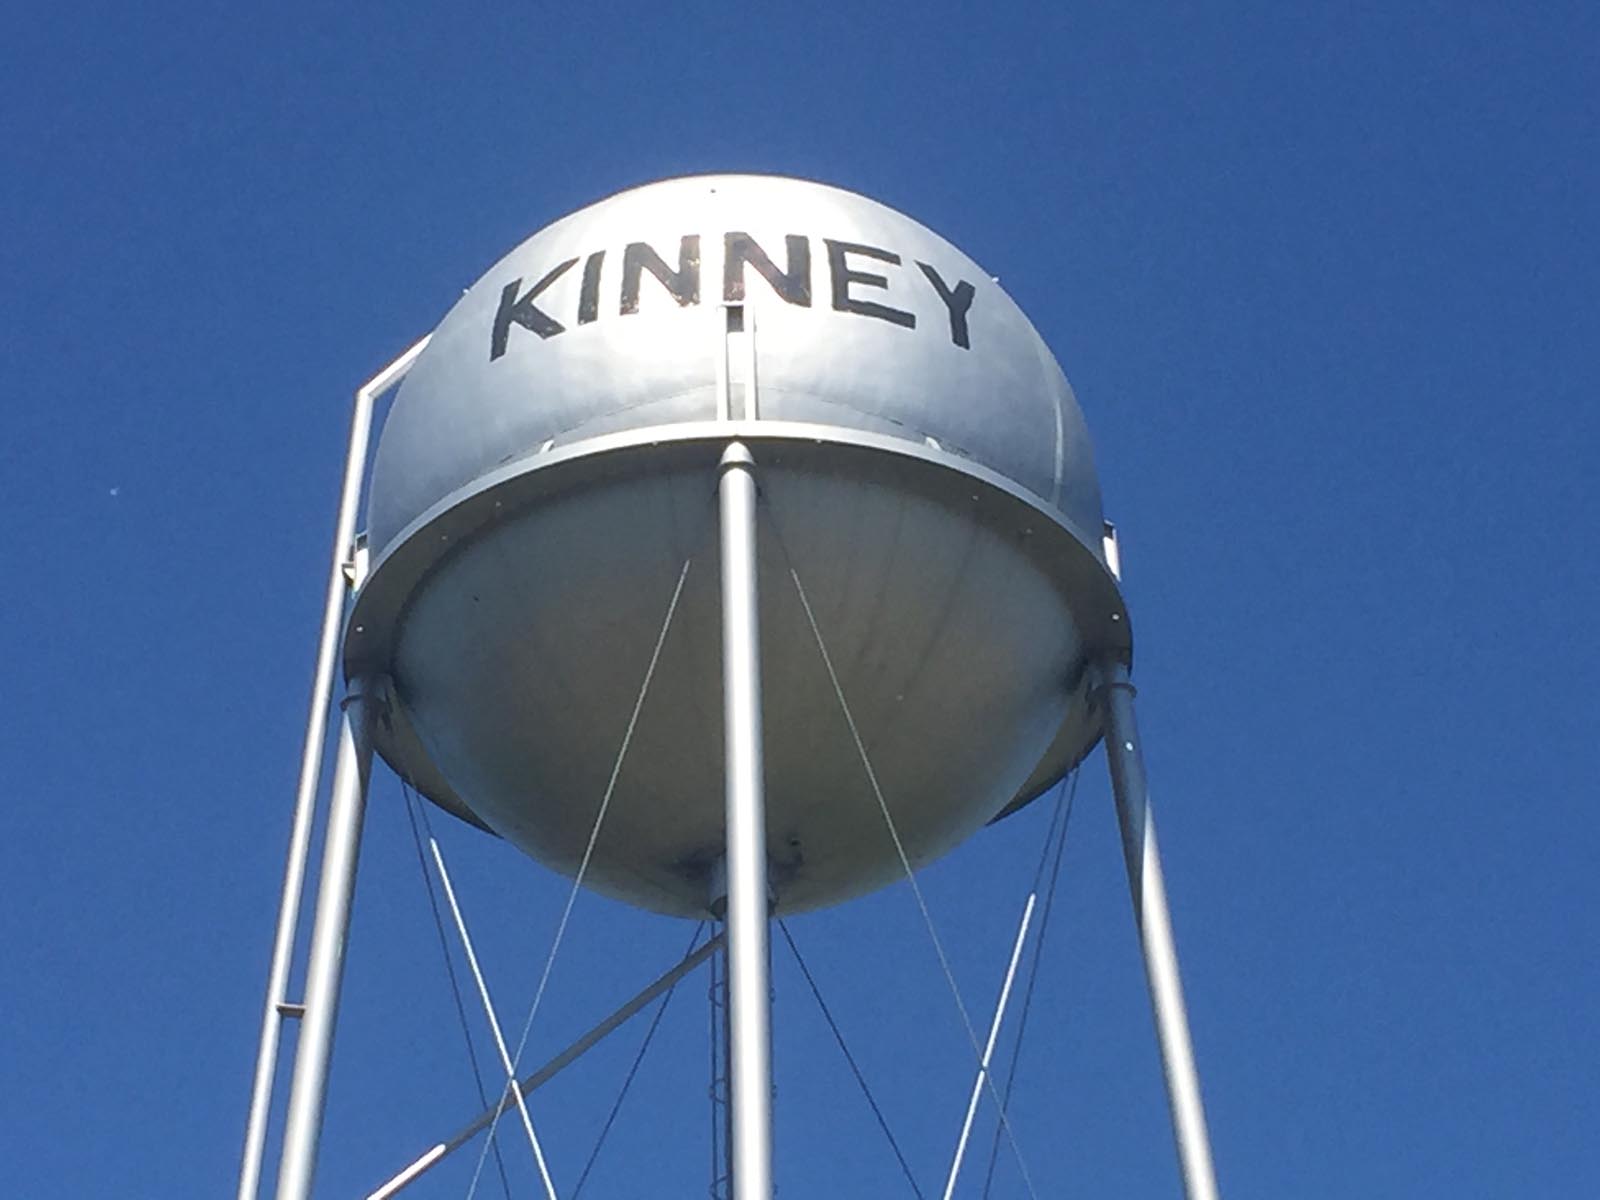 Kinney water tower